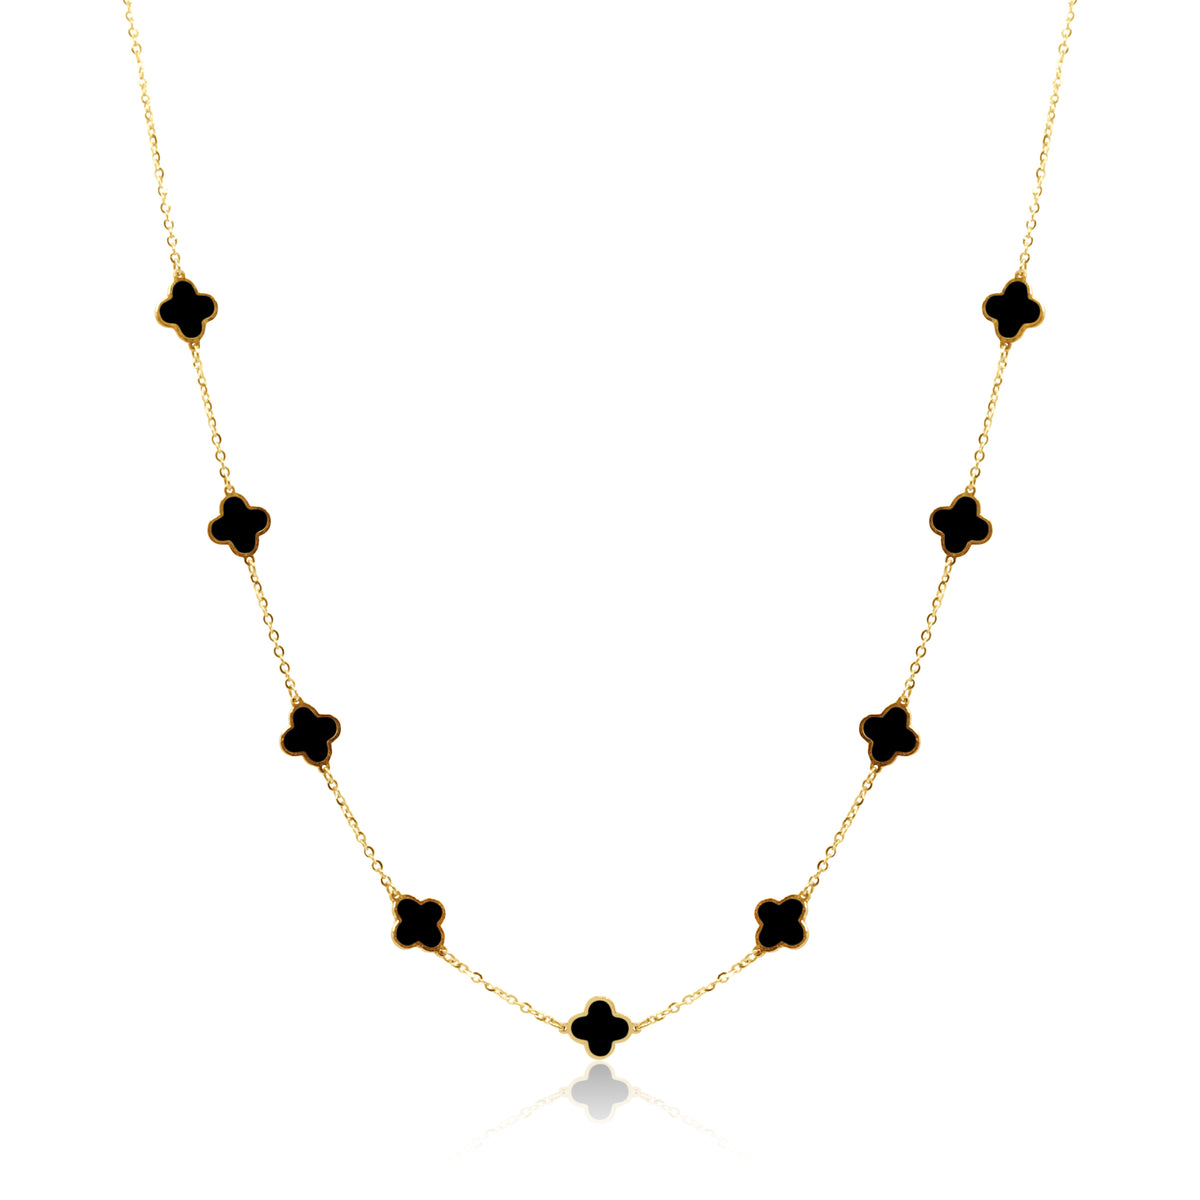 Stone Flower Necklace - Black Onyx